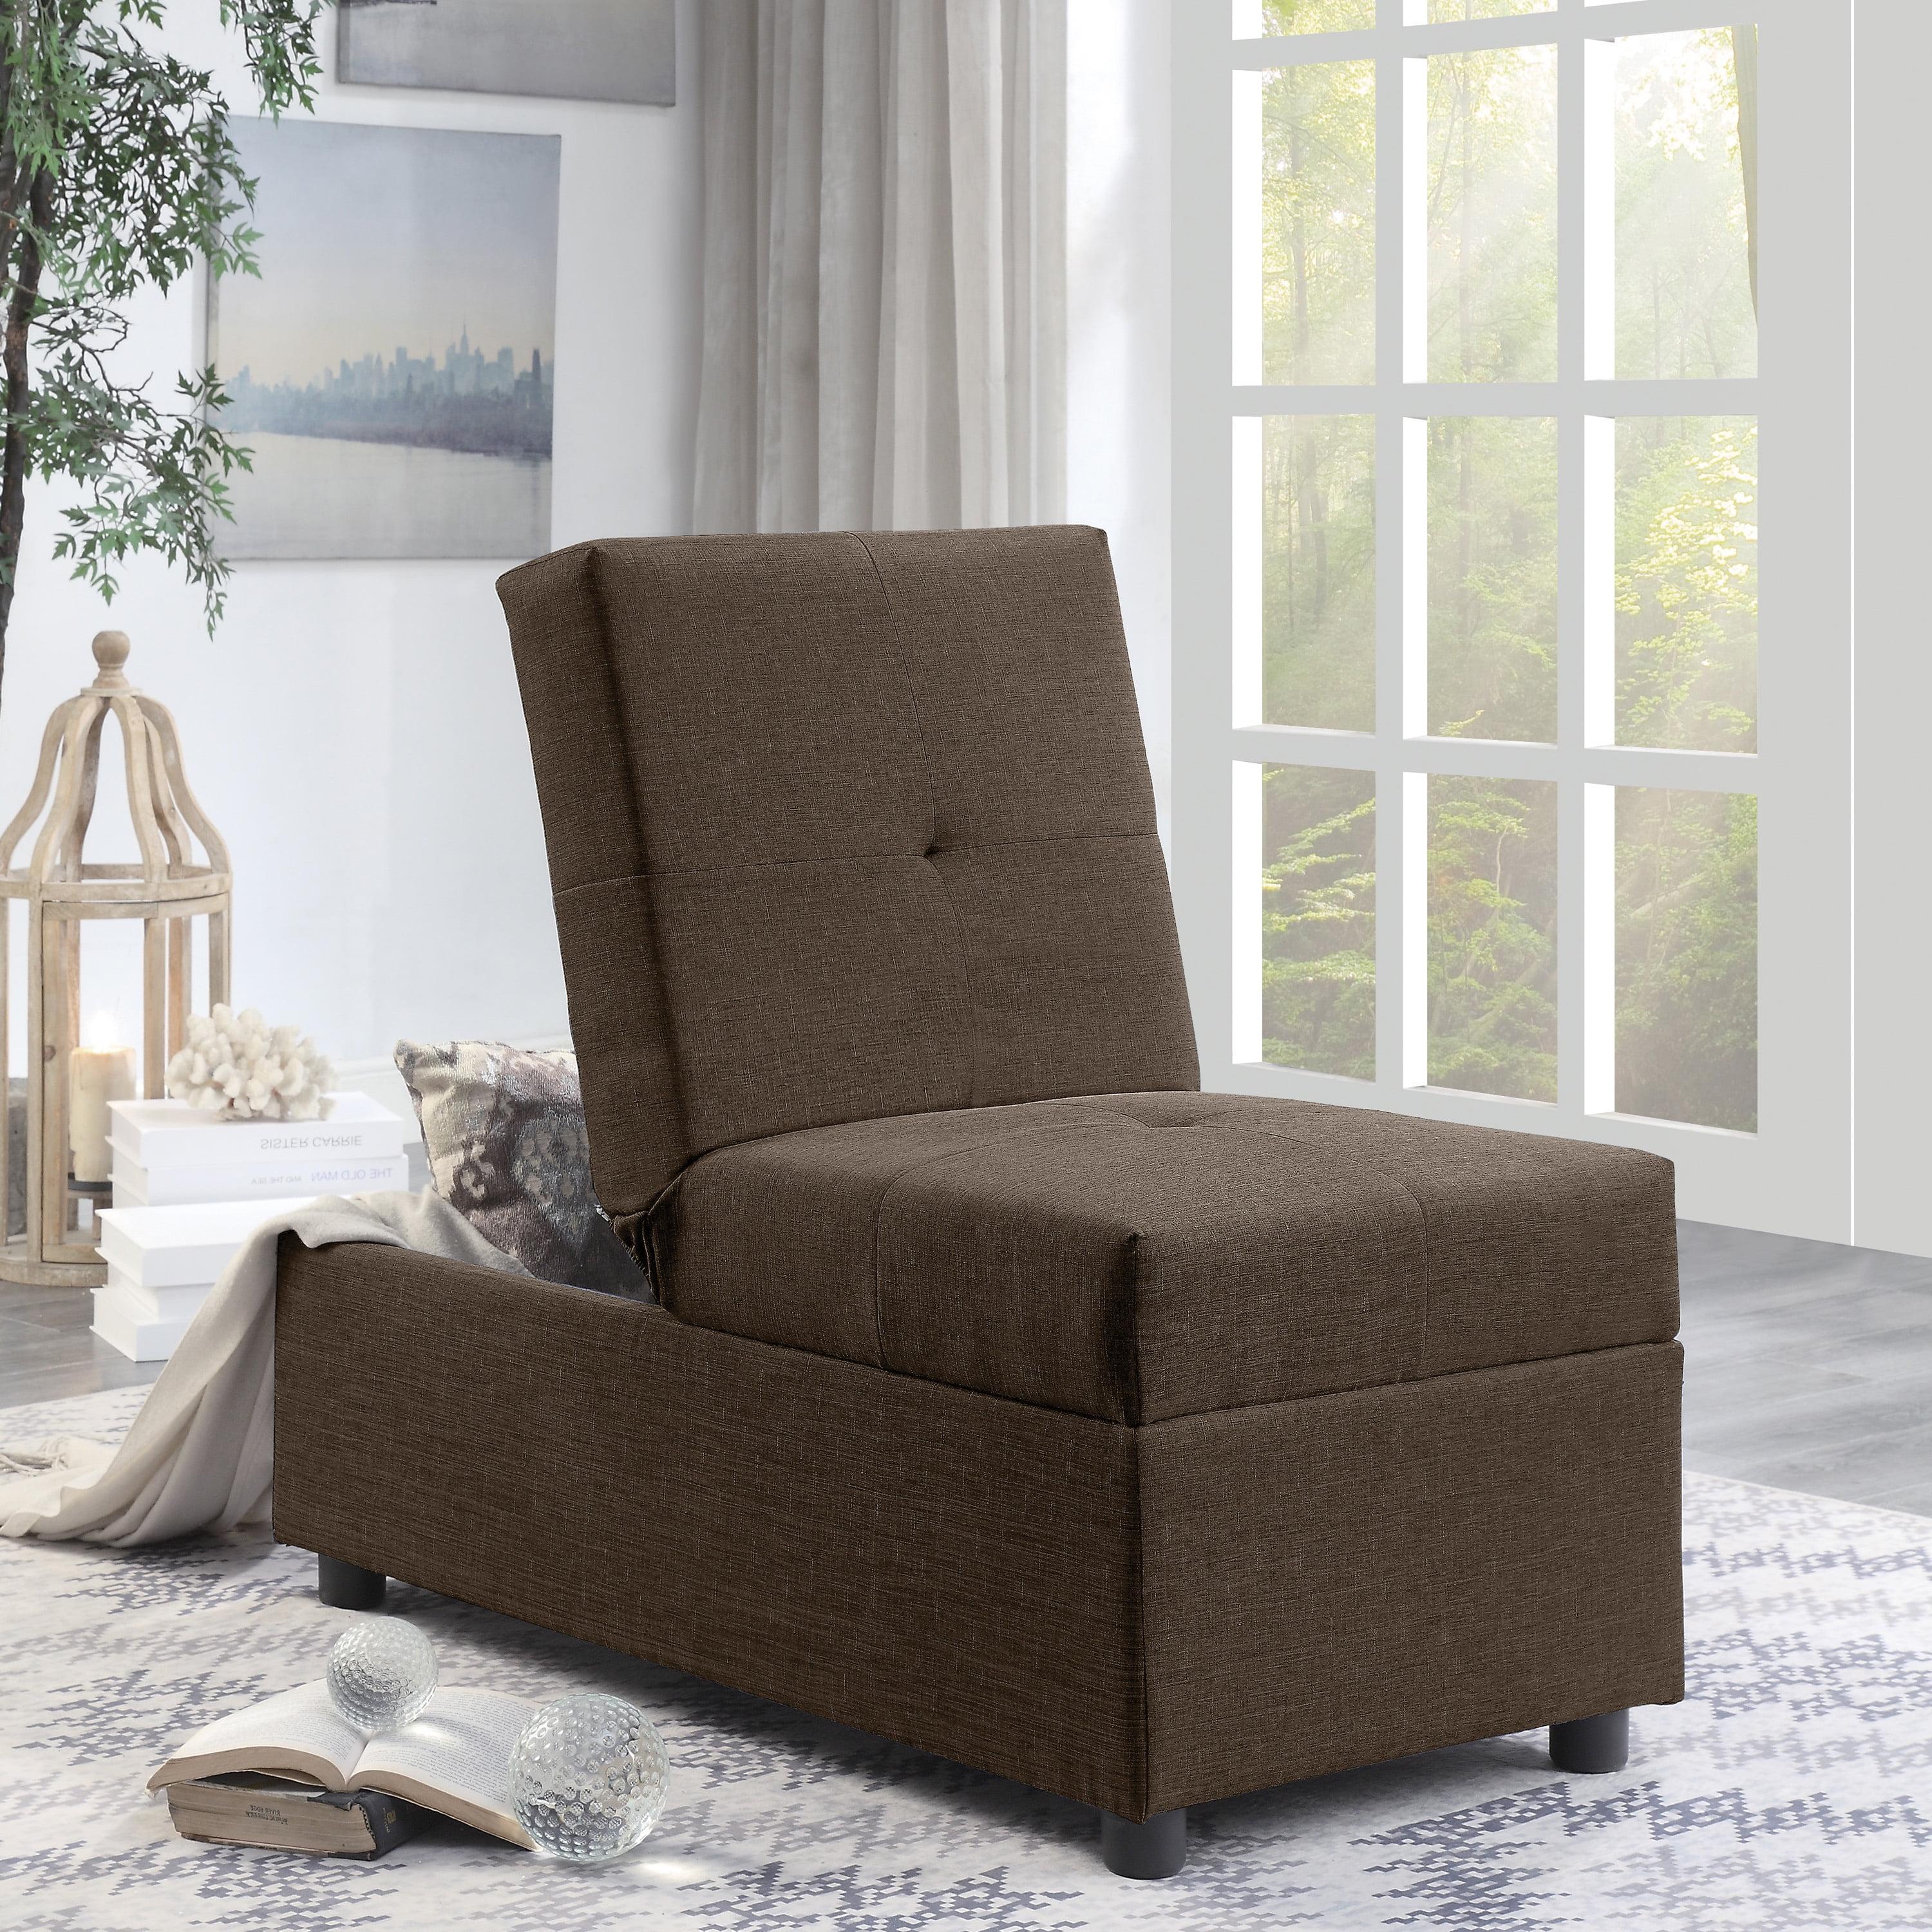 Destry Modern Brown Tufted Convertible Storage Ottoman Chair